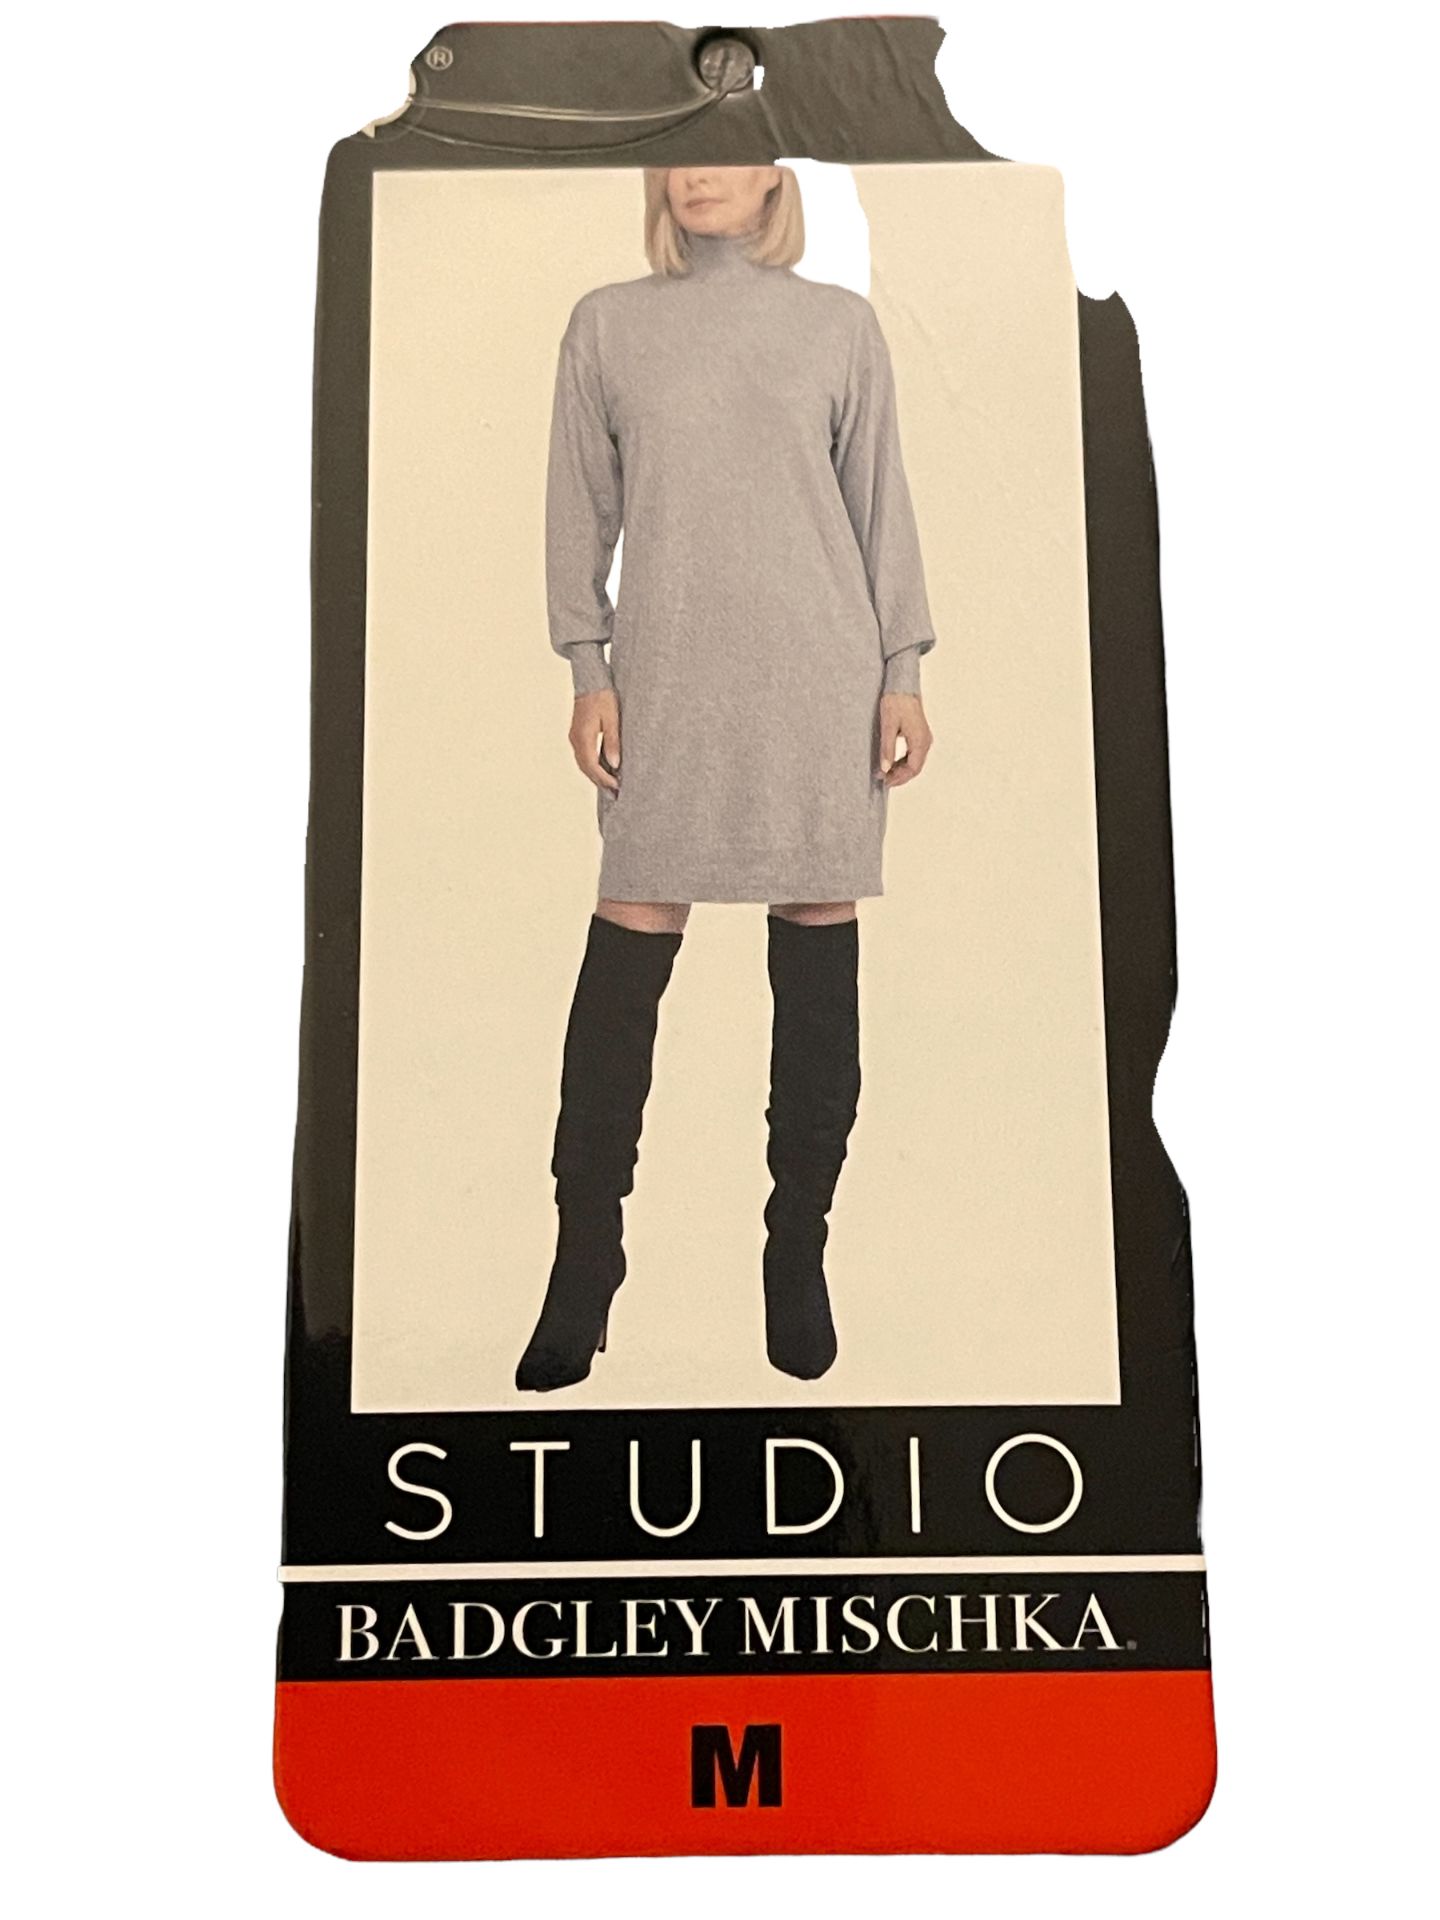 Designer Badgley Mischka Lightweight Fine Knitted Stretchy Jumper Dress UK 12 M RRP £17.99 - Image 5 of 6